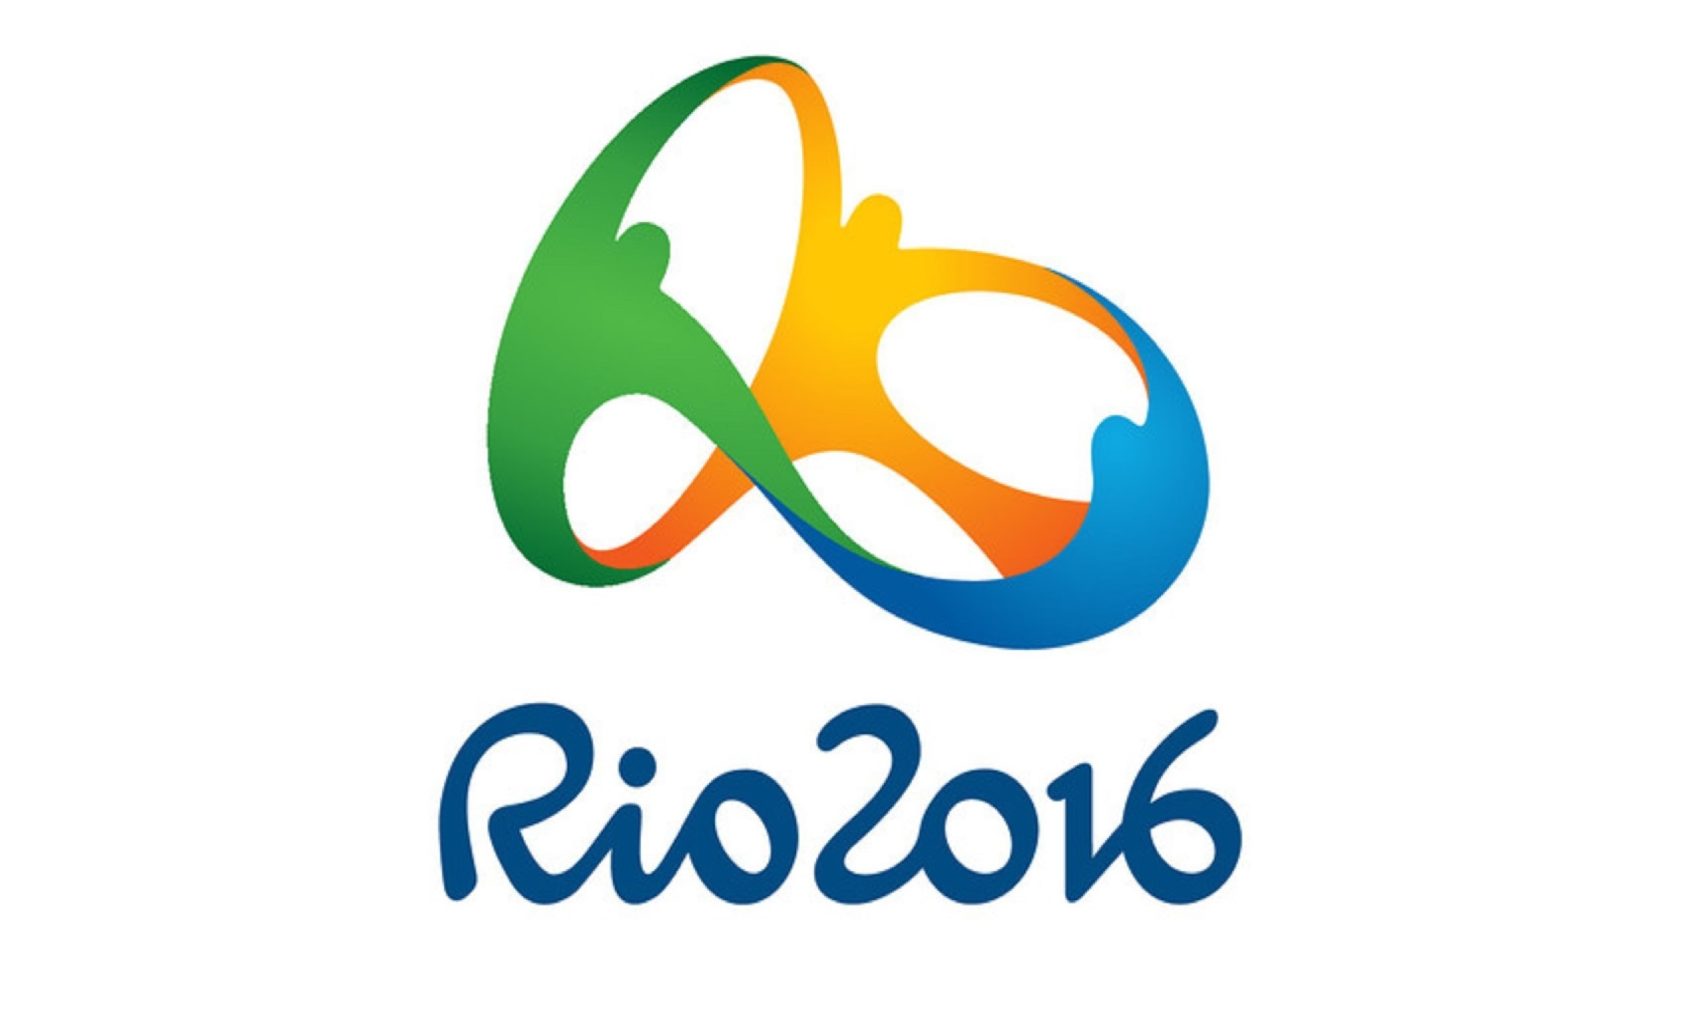 Rio 2016: Logo and Mascot